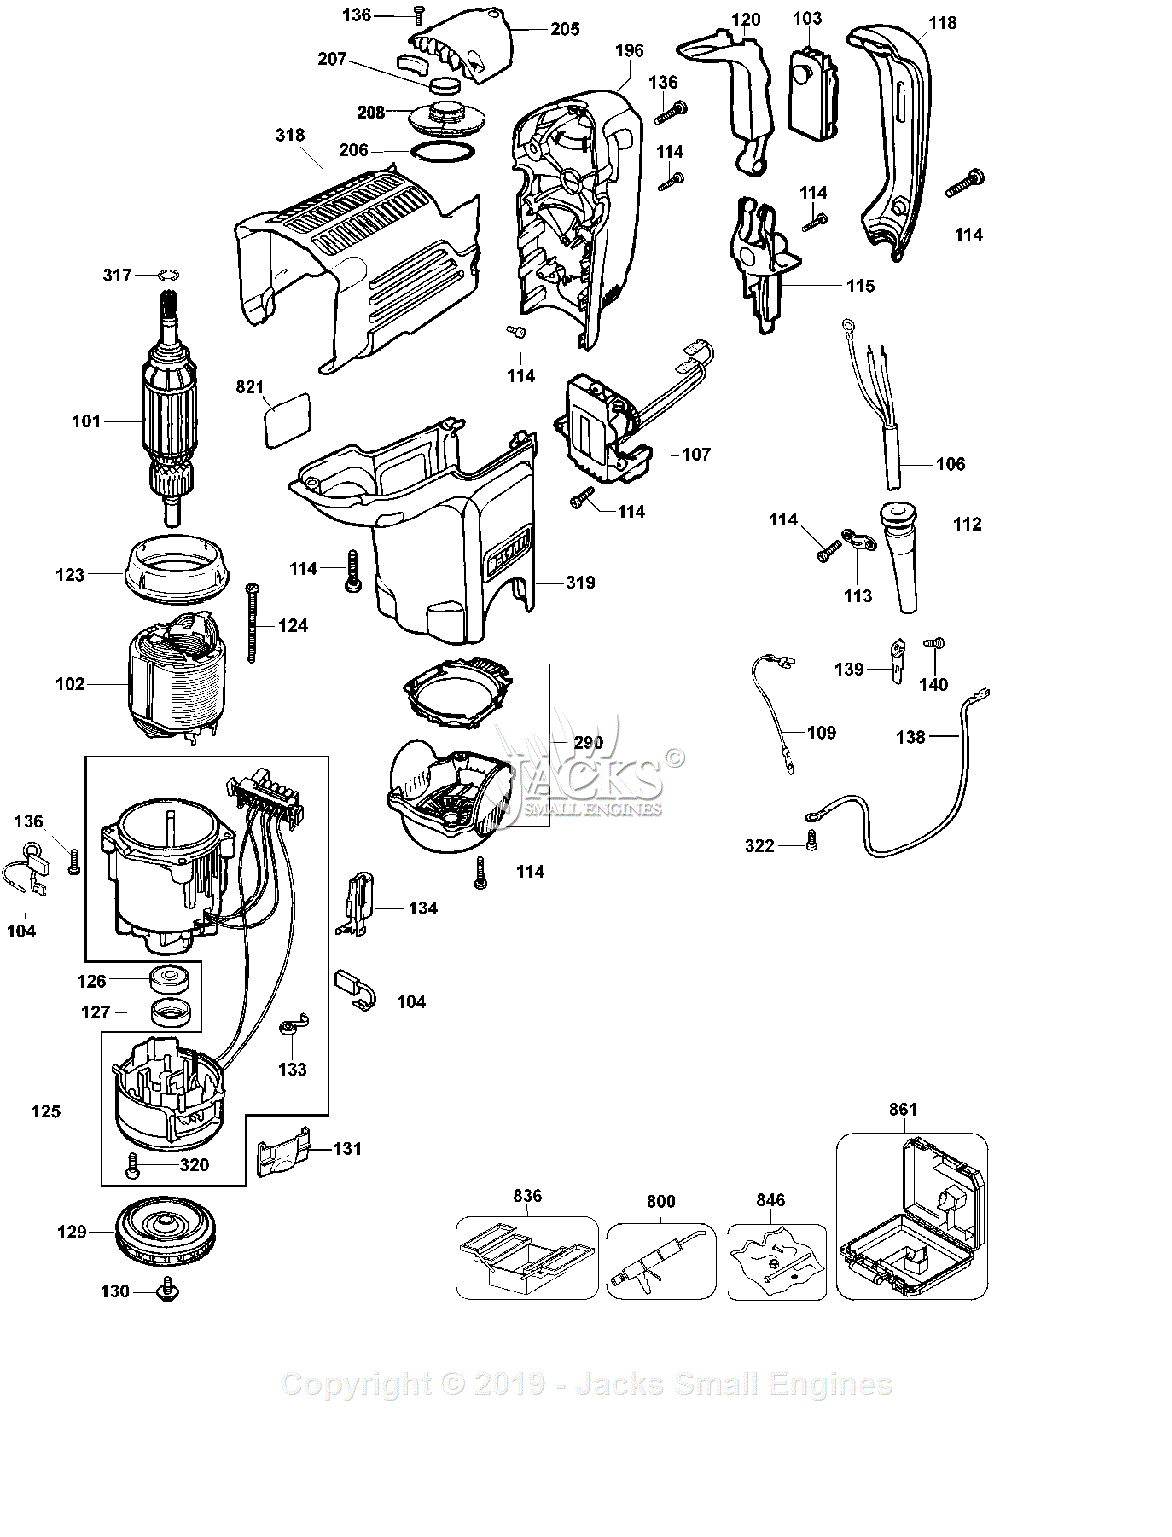 Dewalt D25550K 2) Parts Diagram HAMMER DRILL ASSEMBLY